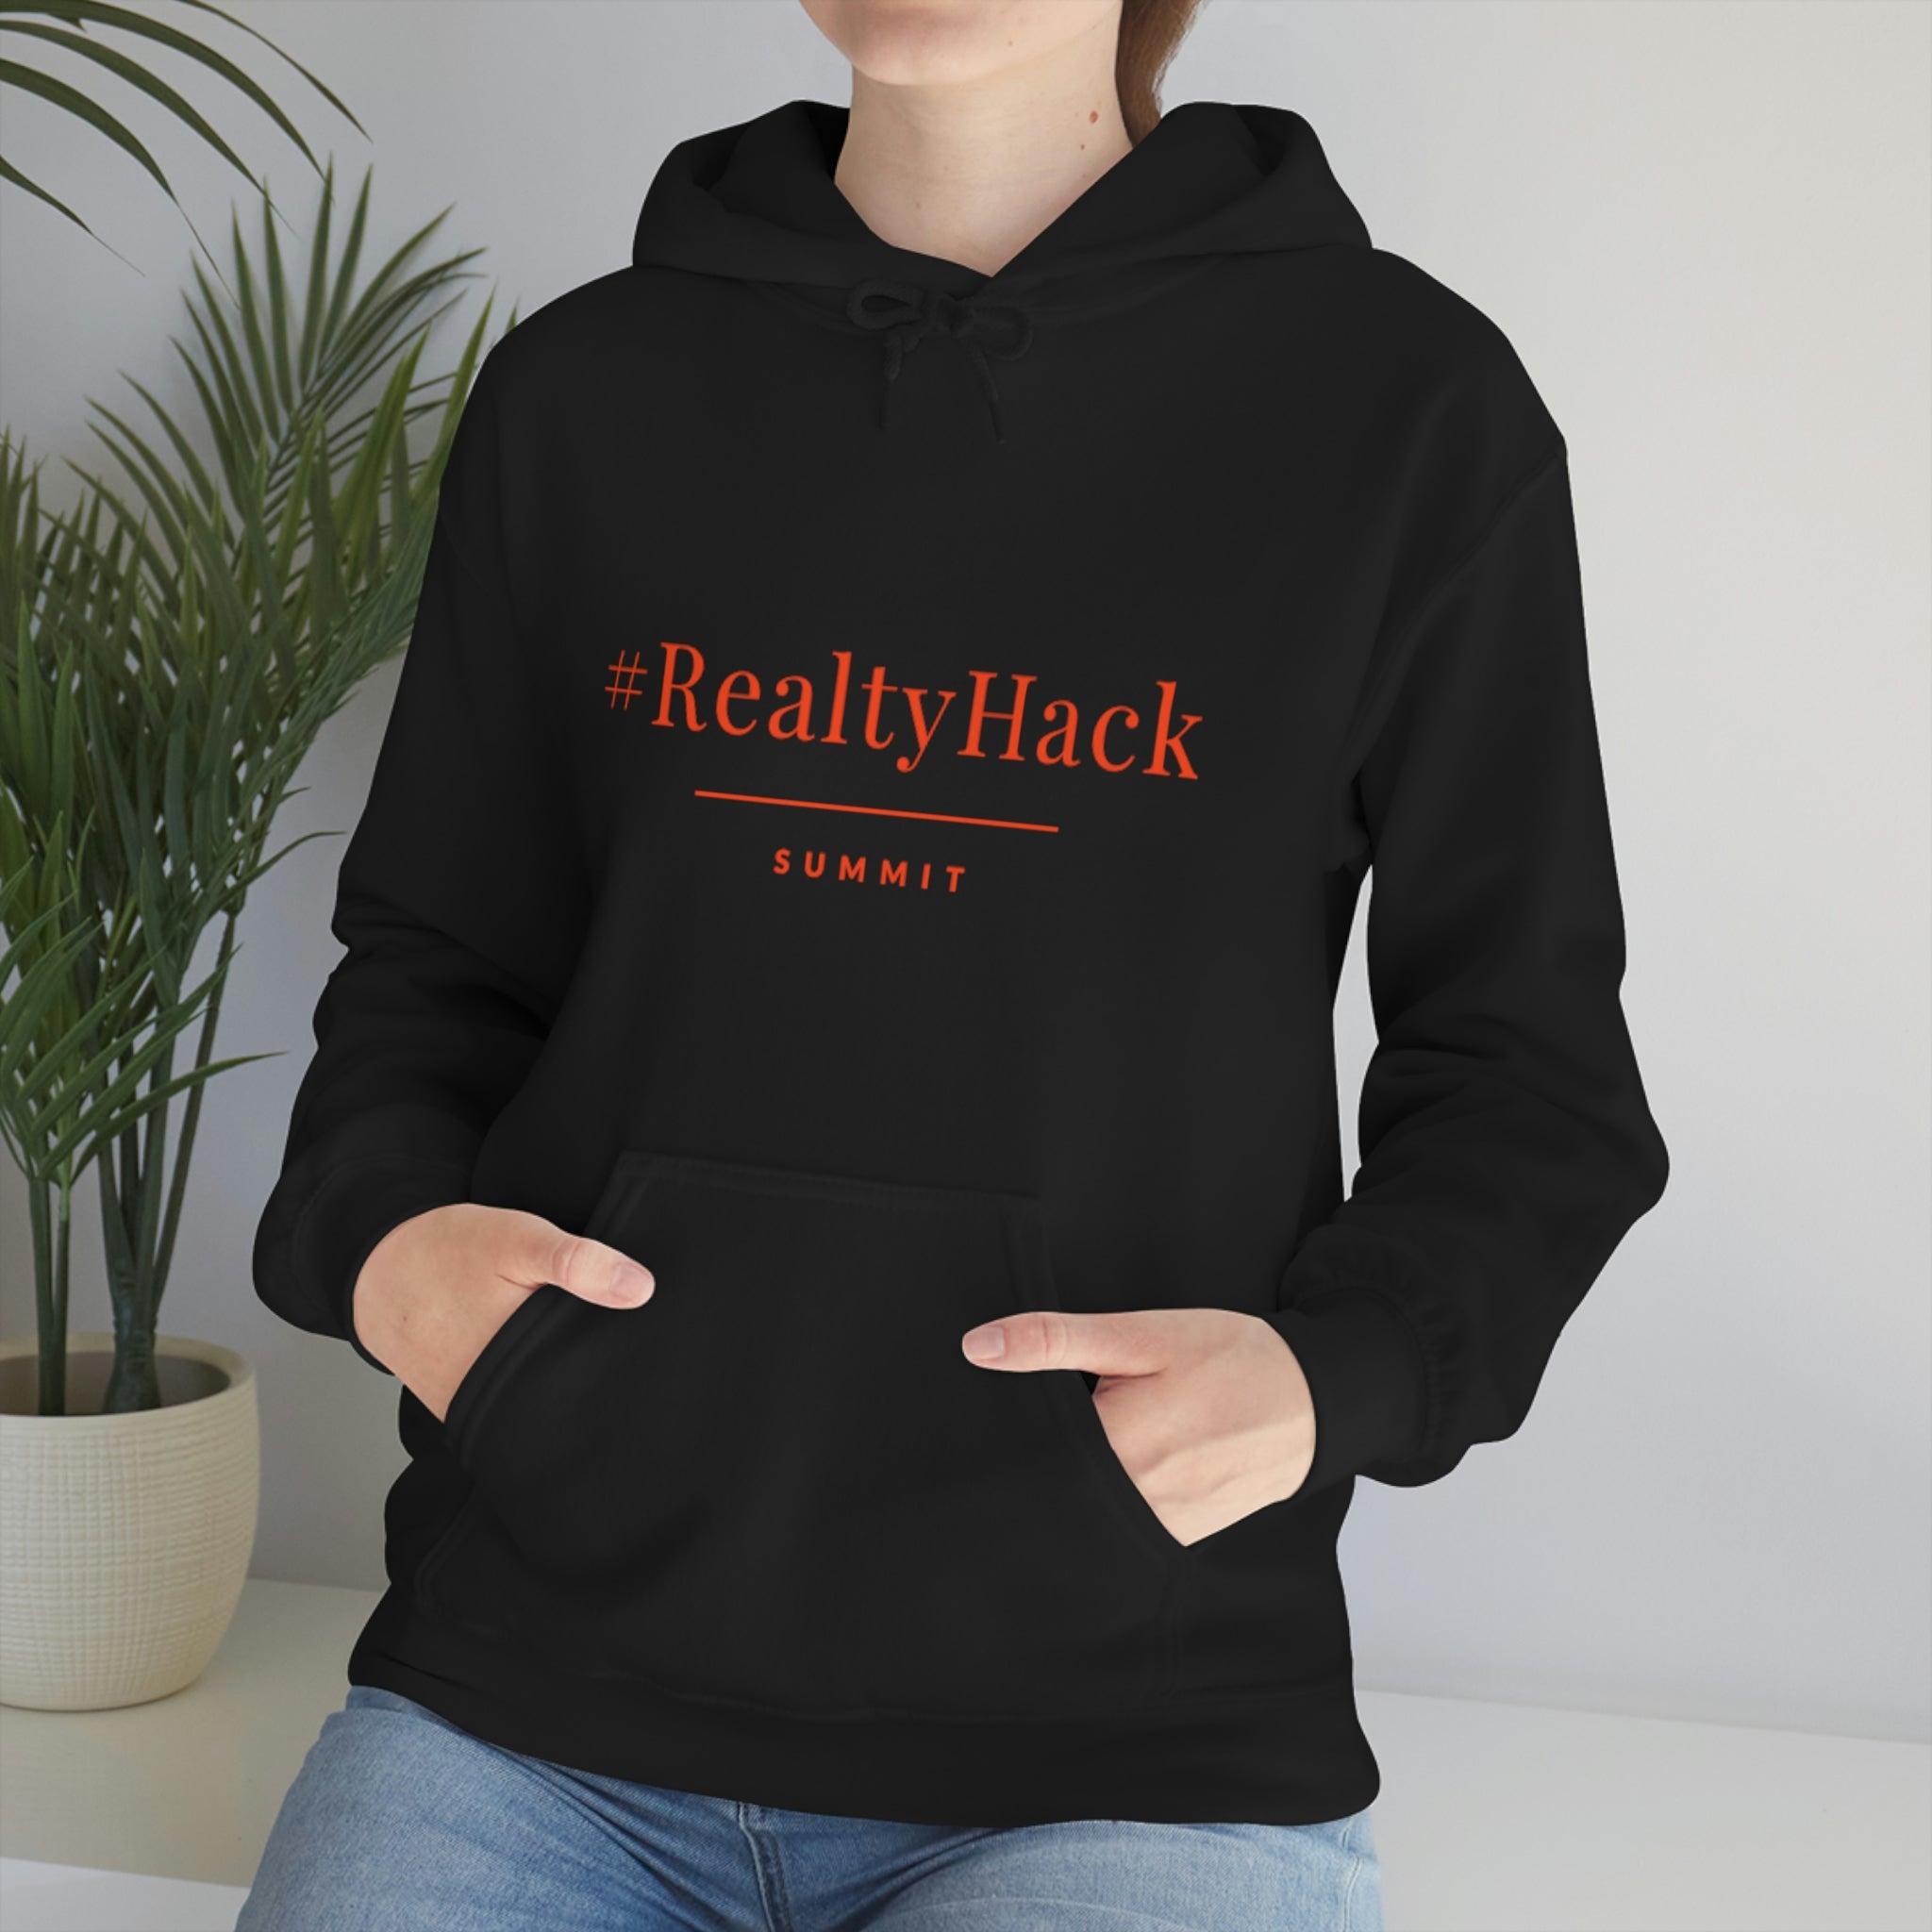 #RealtyHack Summit Hooded Sweatshirt